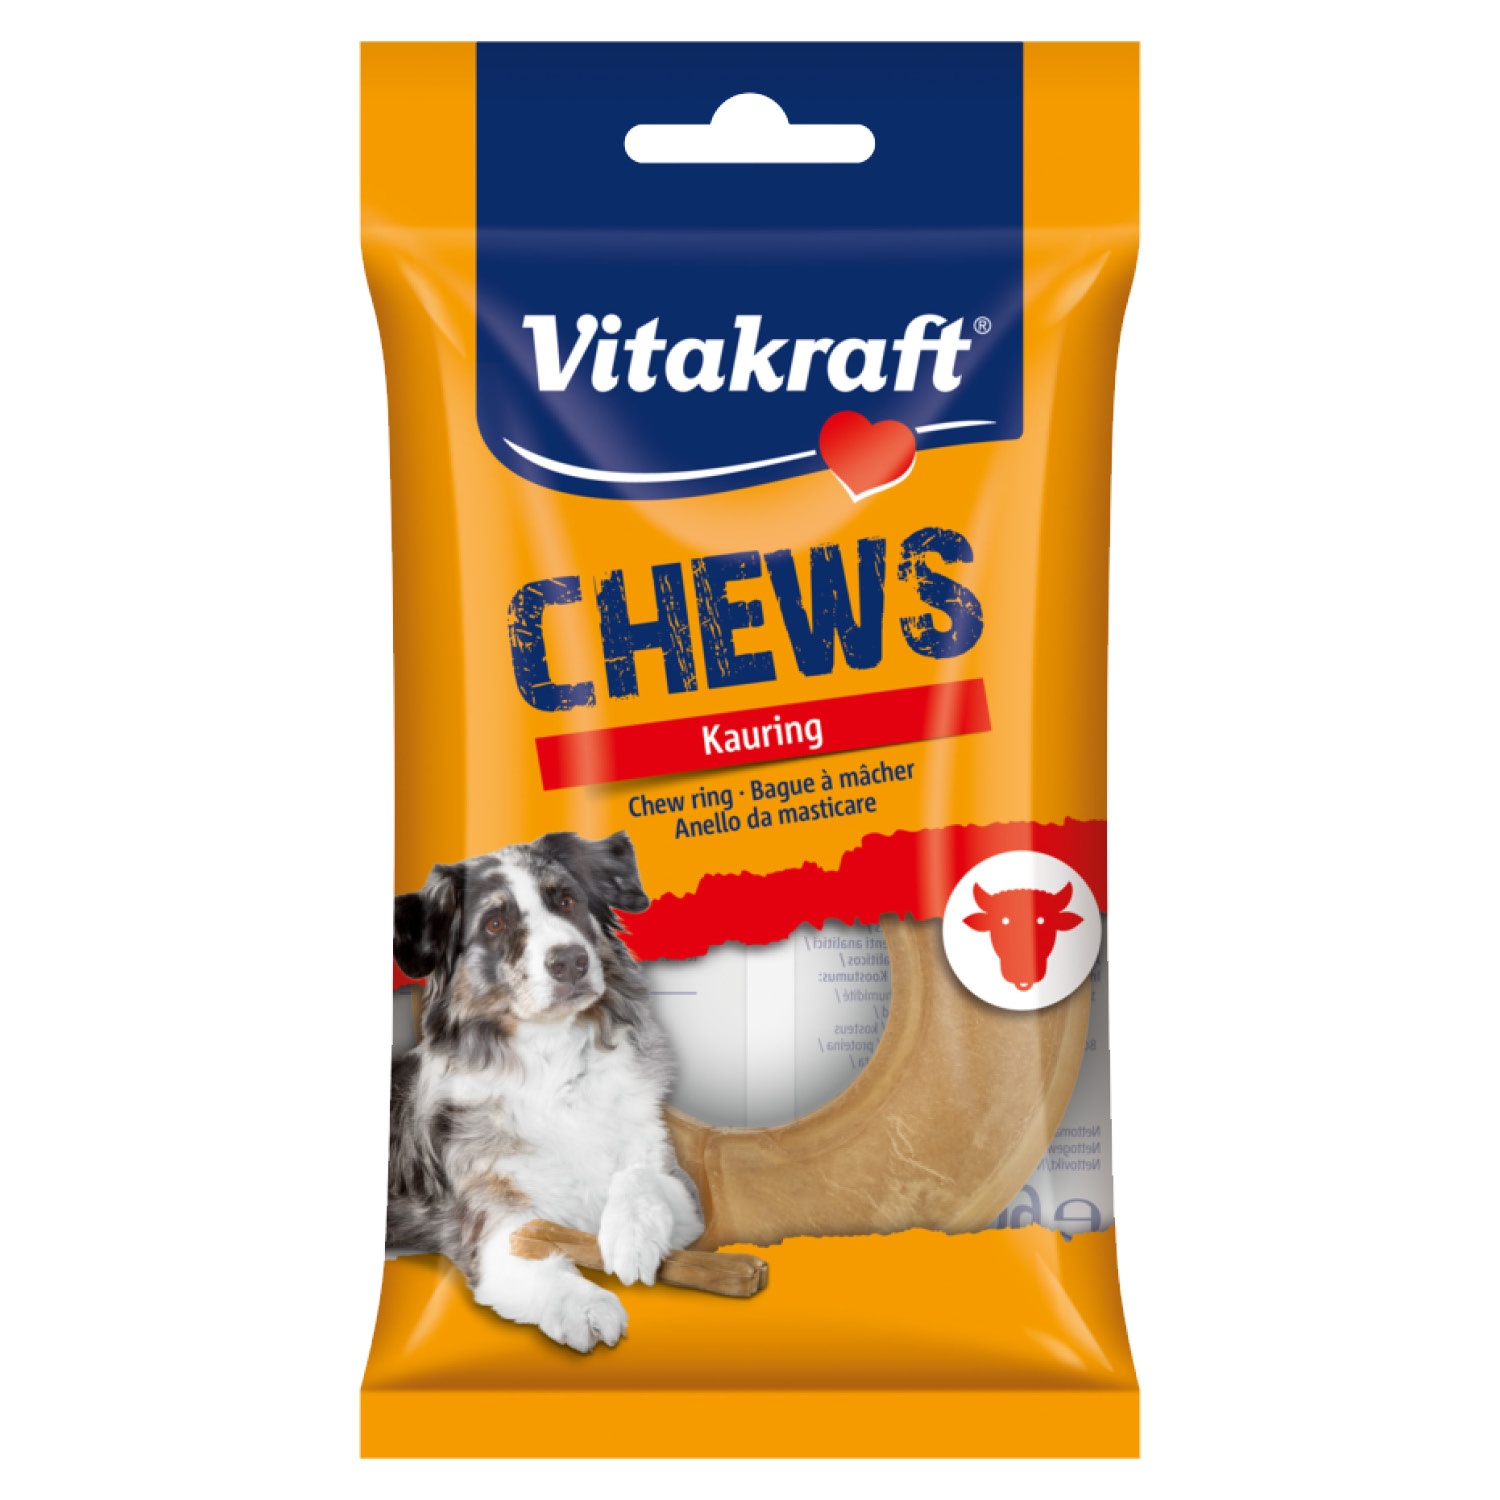 VITAKRAFT® Chews Kausnacks 60 g